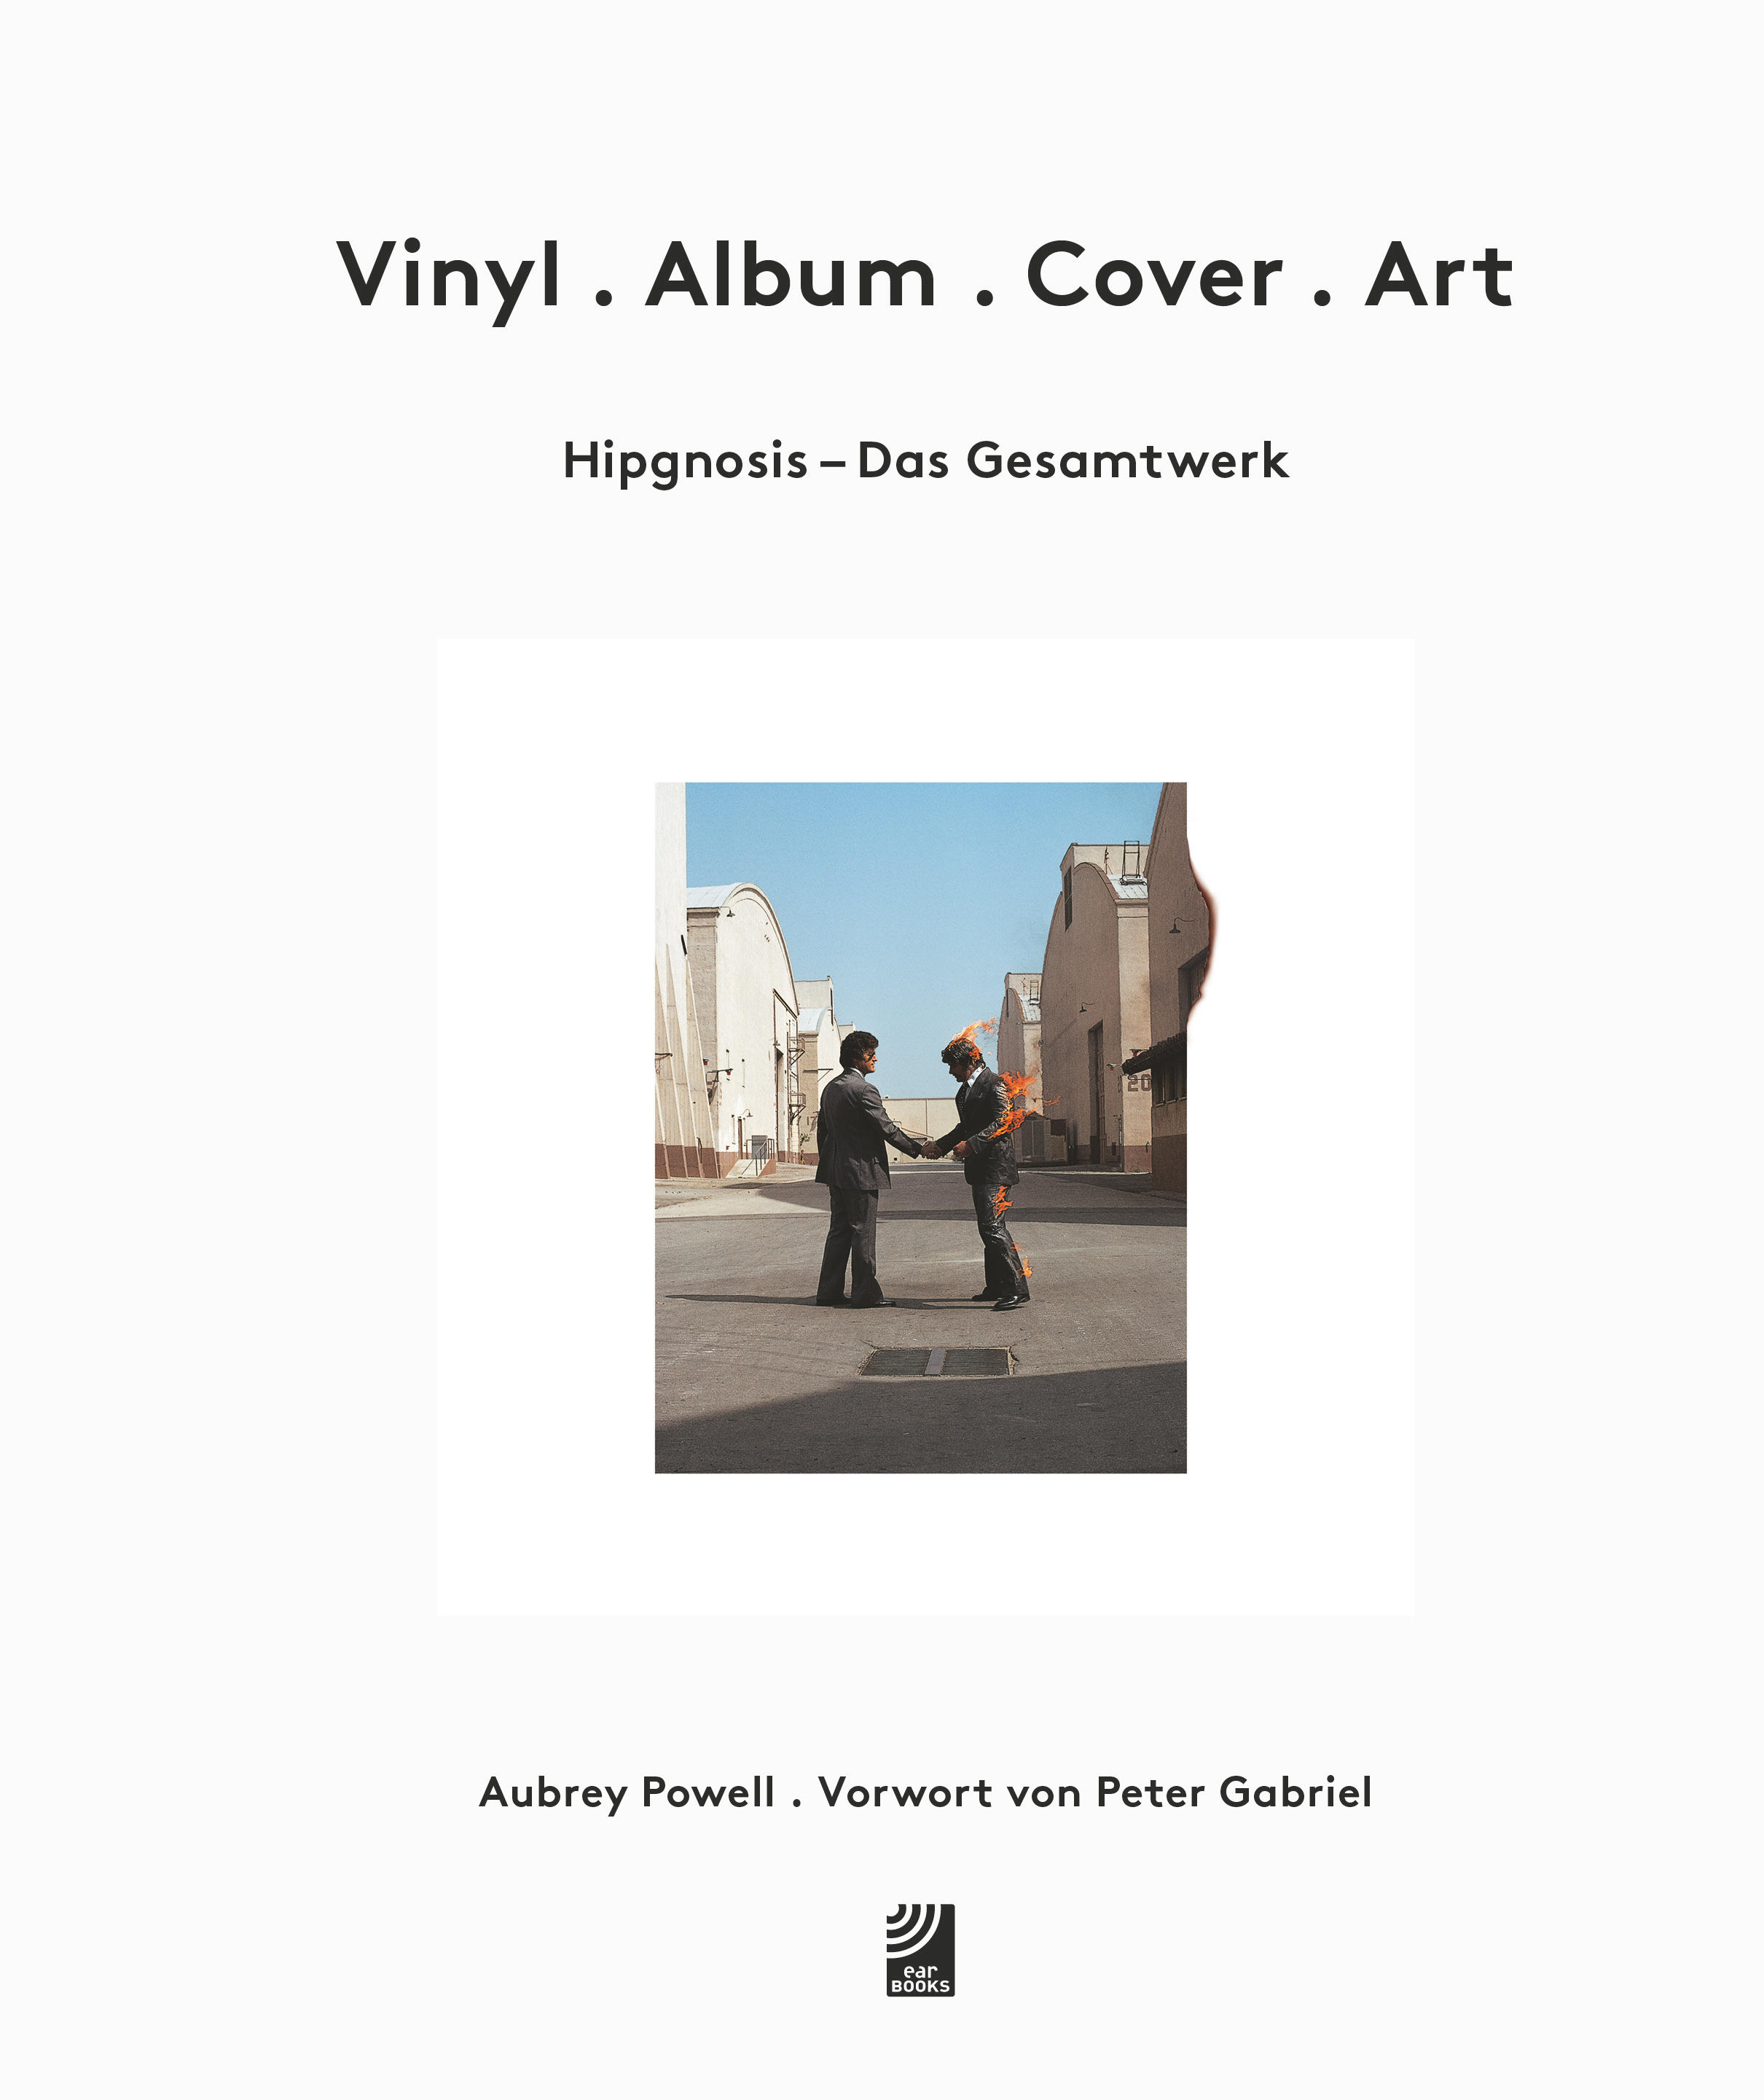 Cover Art-Das Hipgnosis Gesamtwerk Vinyl Album